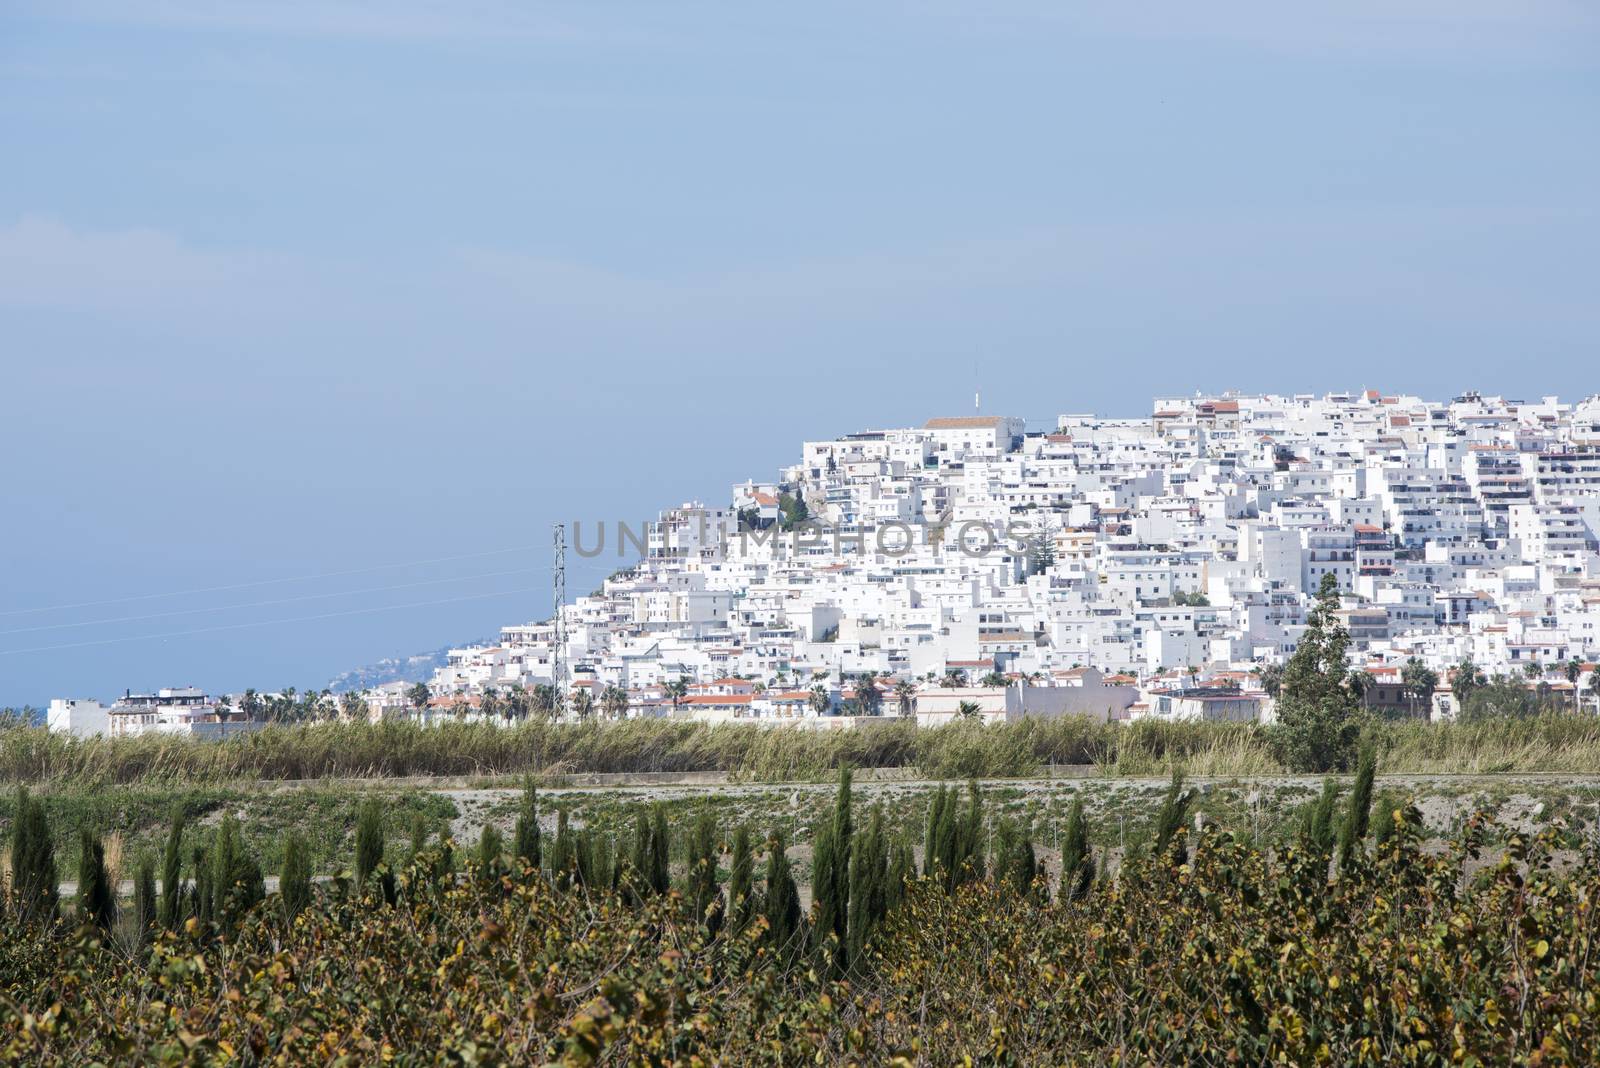 torrox village near malaga in Spain by compuinfoto